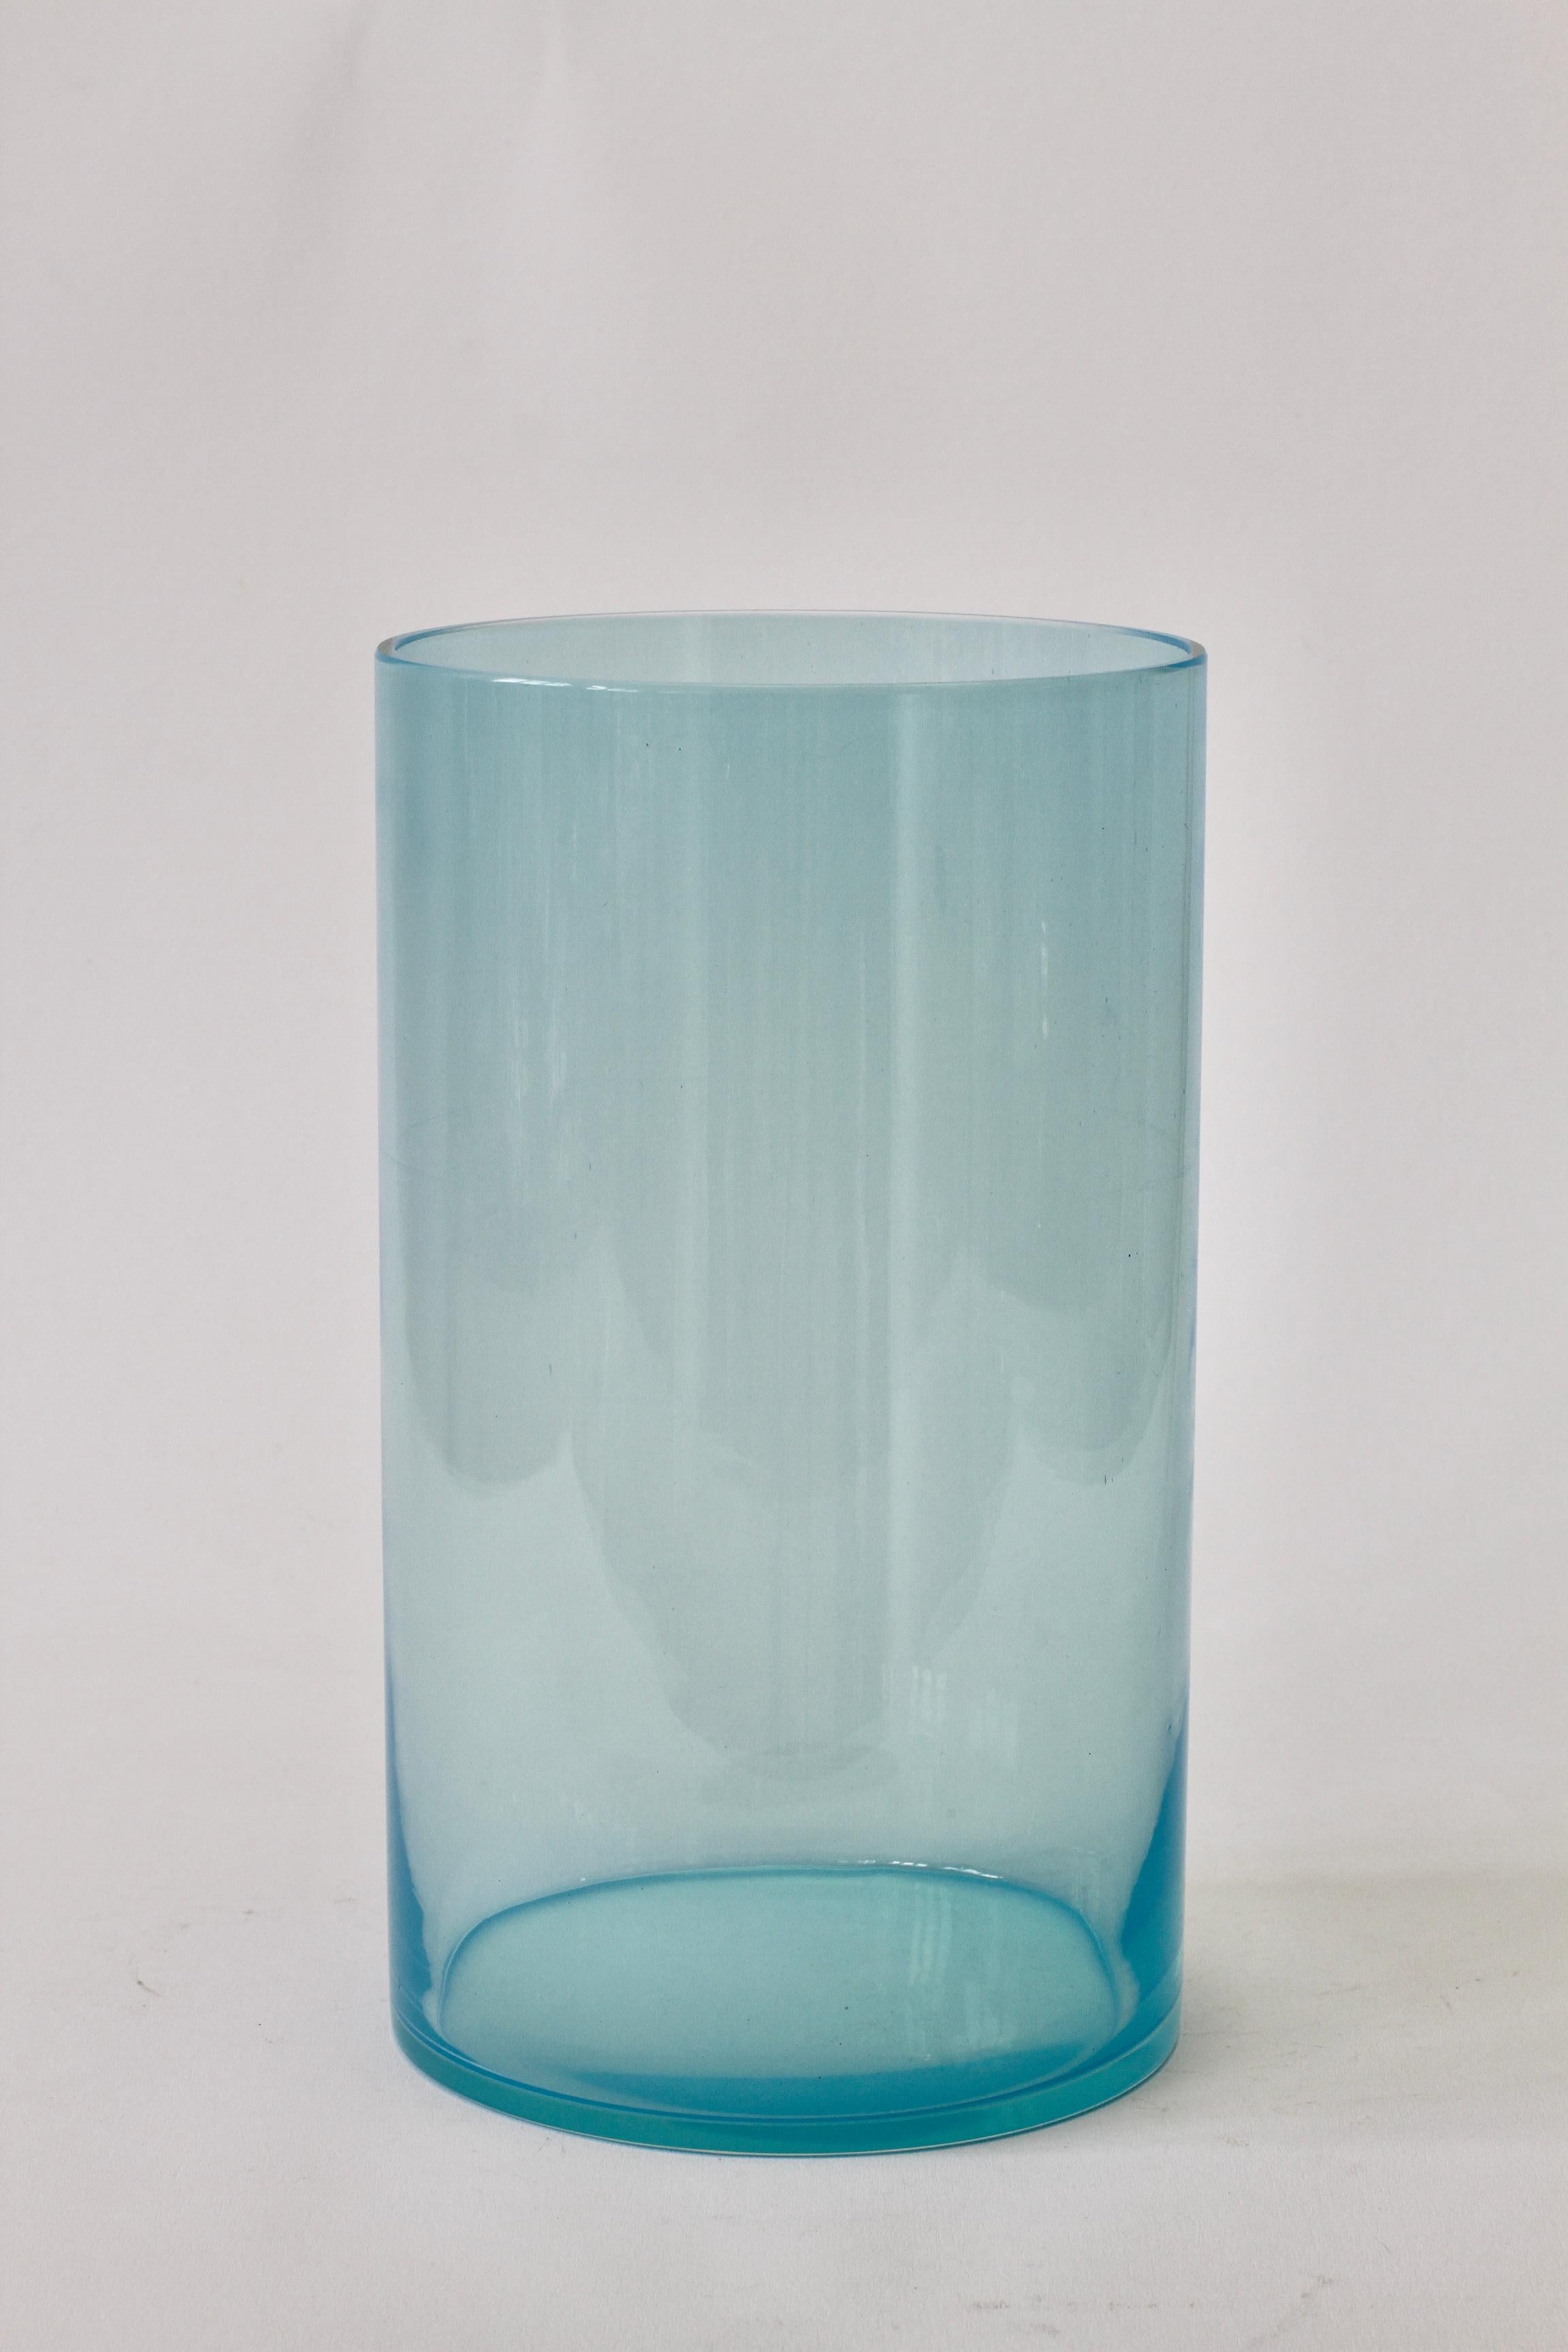 Stunning midcentury, vintage 'Opalino' Murano glass vase or vessel designed by Antonio da Ros for Cenedese, circa 1970-1990 Wonderful translucent color (colour) of vibrant lilac / aubergine . Simplistic yet elegant form - almost futuristic.

Vase